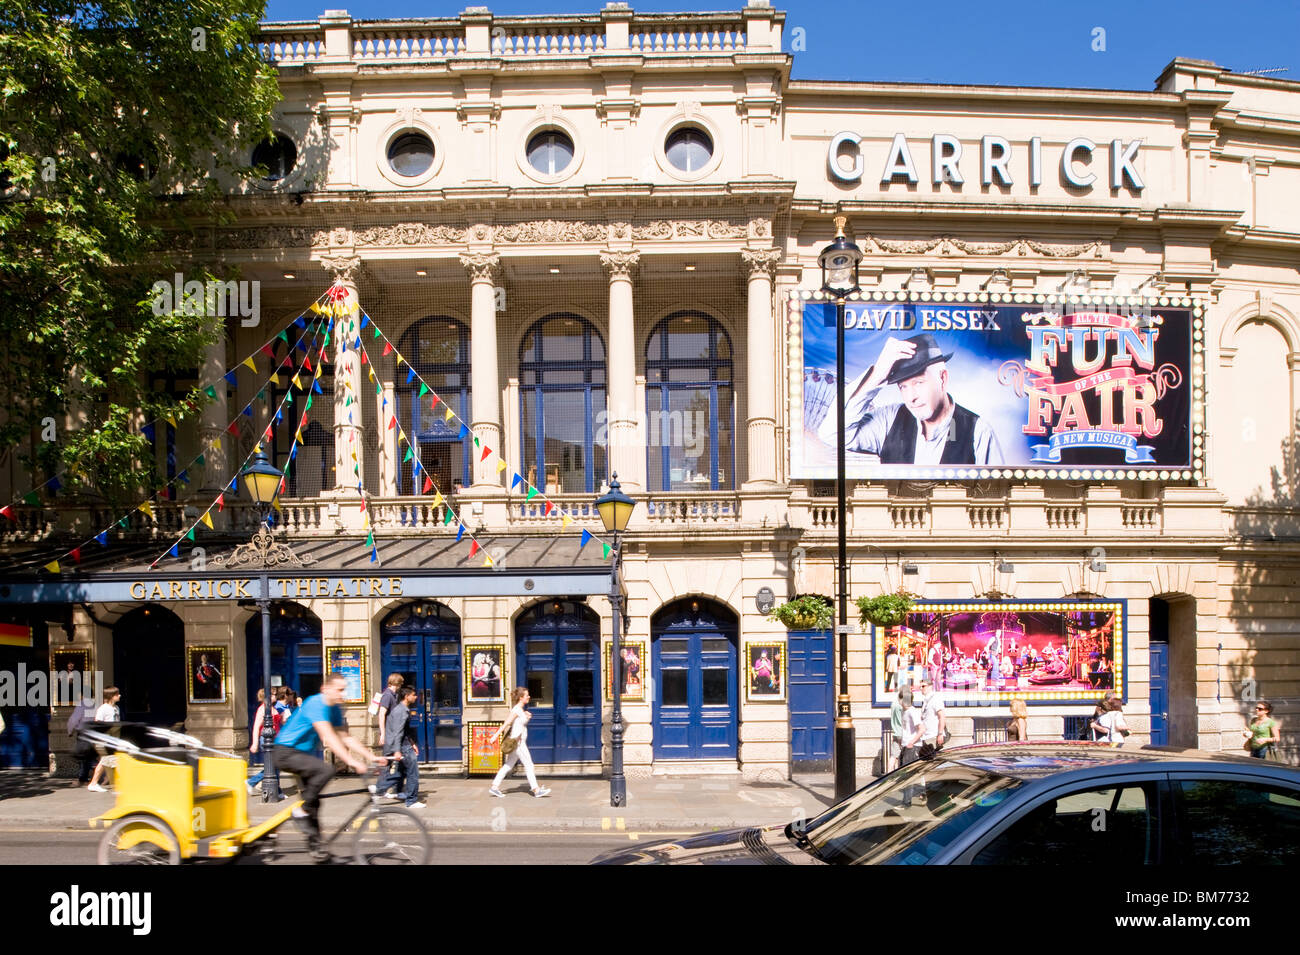 Garrick theatre on Charing Cross Road, London, United Kingdom Stock Photo